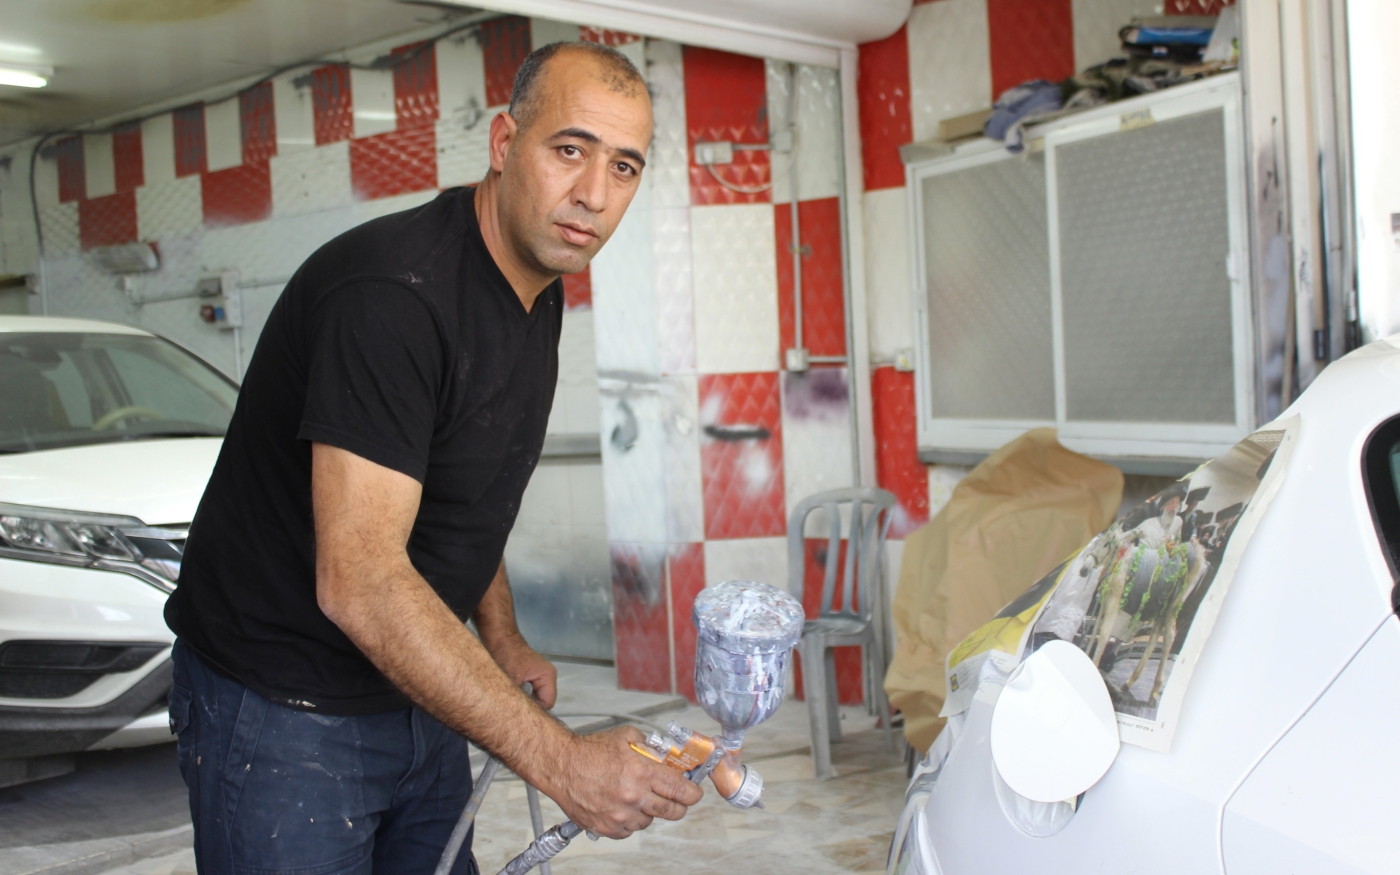 Ihab Mshaashaa s’attend à recevoir un avis d’expulsion du garage qu’il loue depuis 30 ans (MEE/Aseel Jundi)